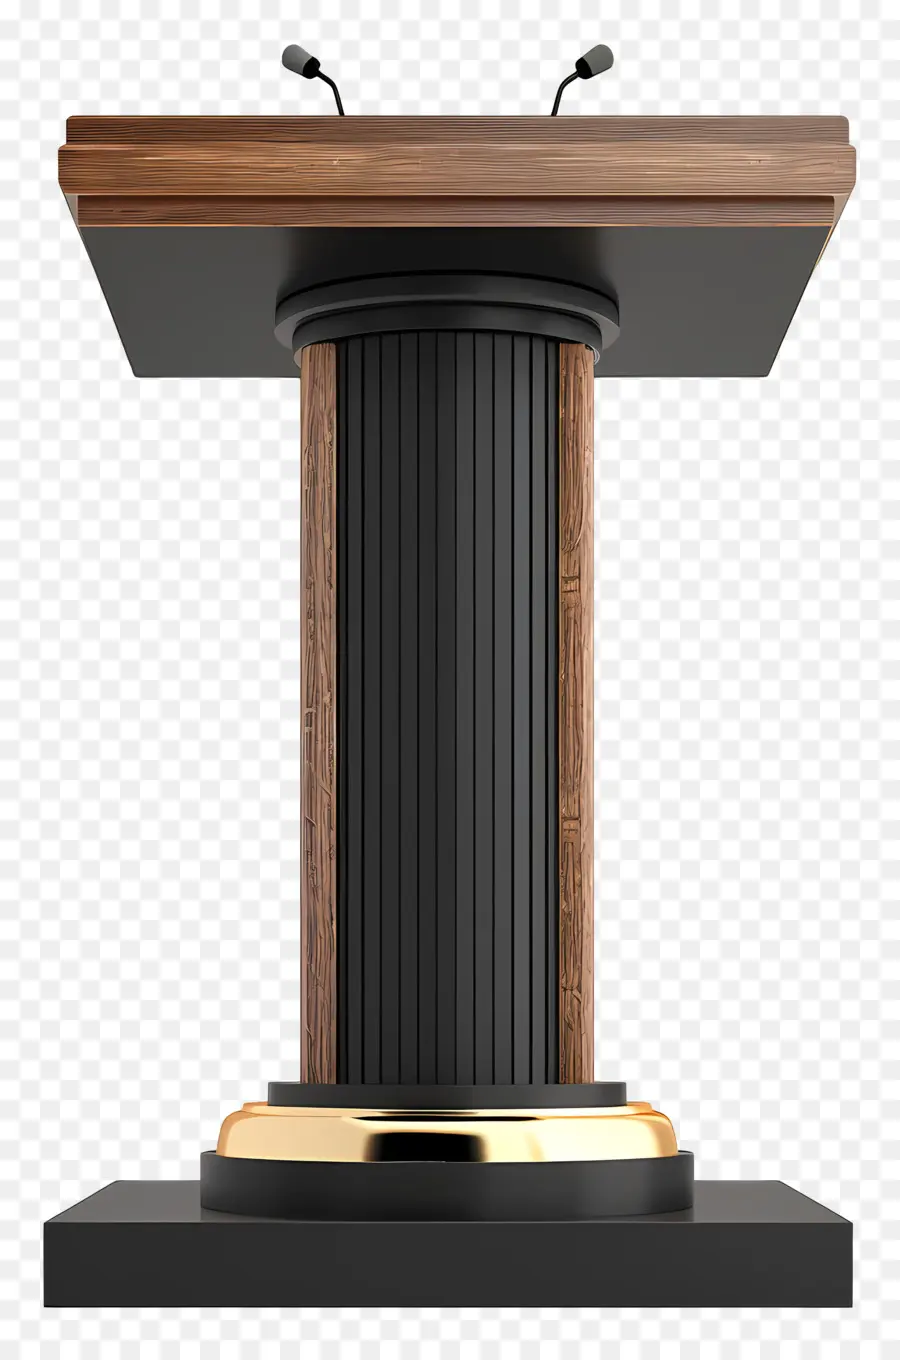 speech podium wooden podium gold trim microphone stand smooth surface